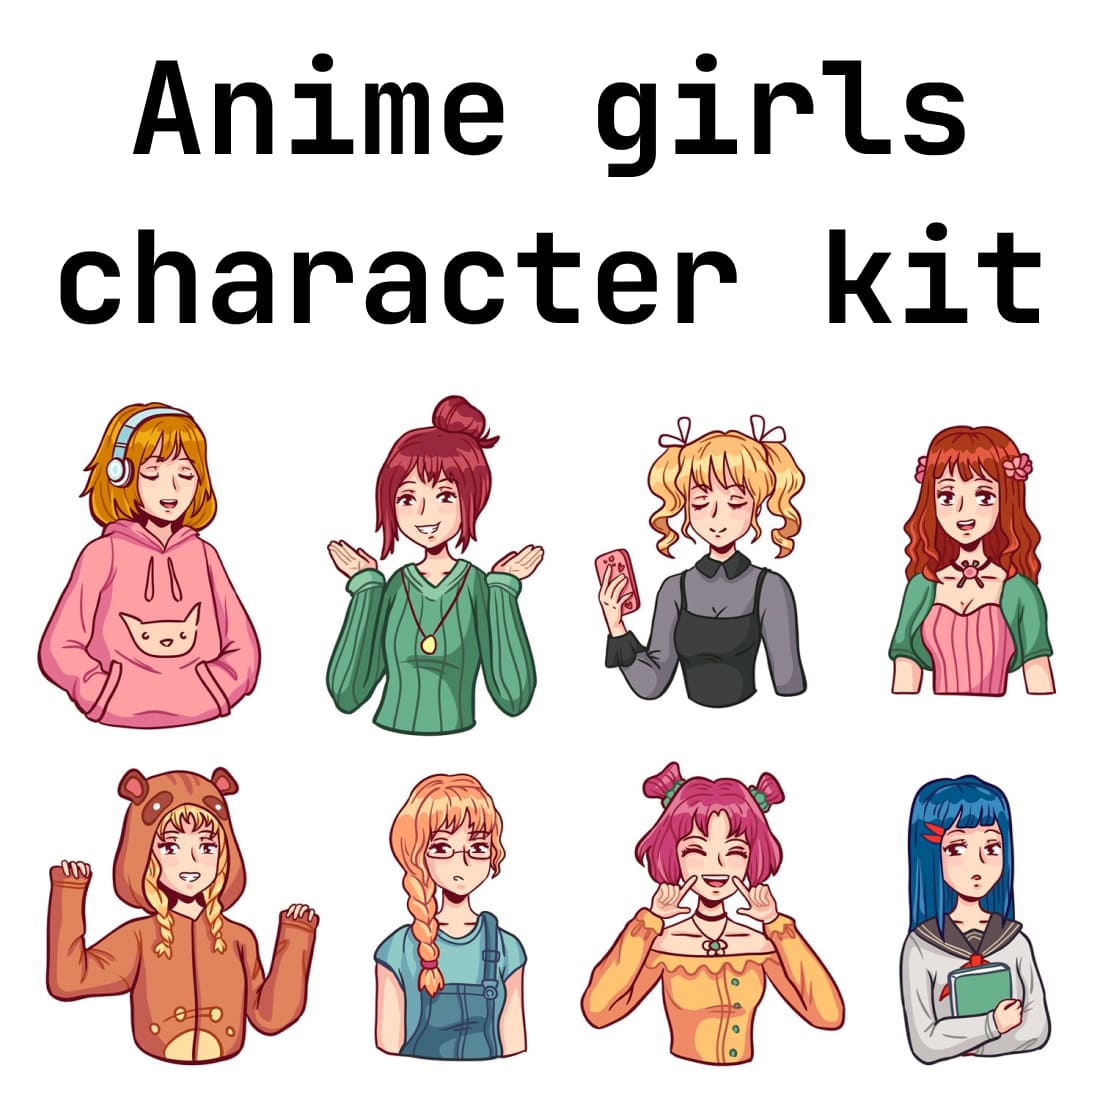 Anime Girls Character Kit. Manga Girl With Smartphone, Heads.